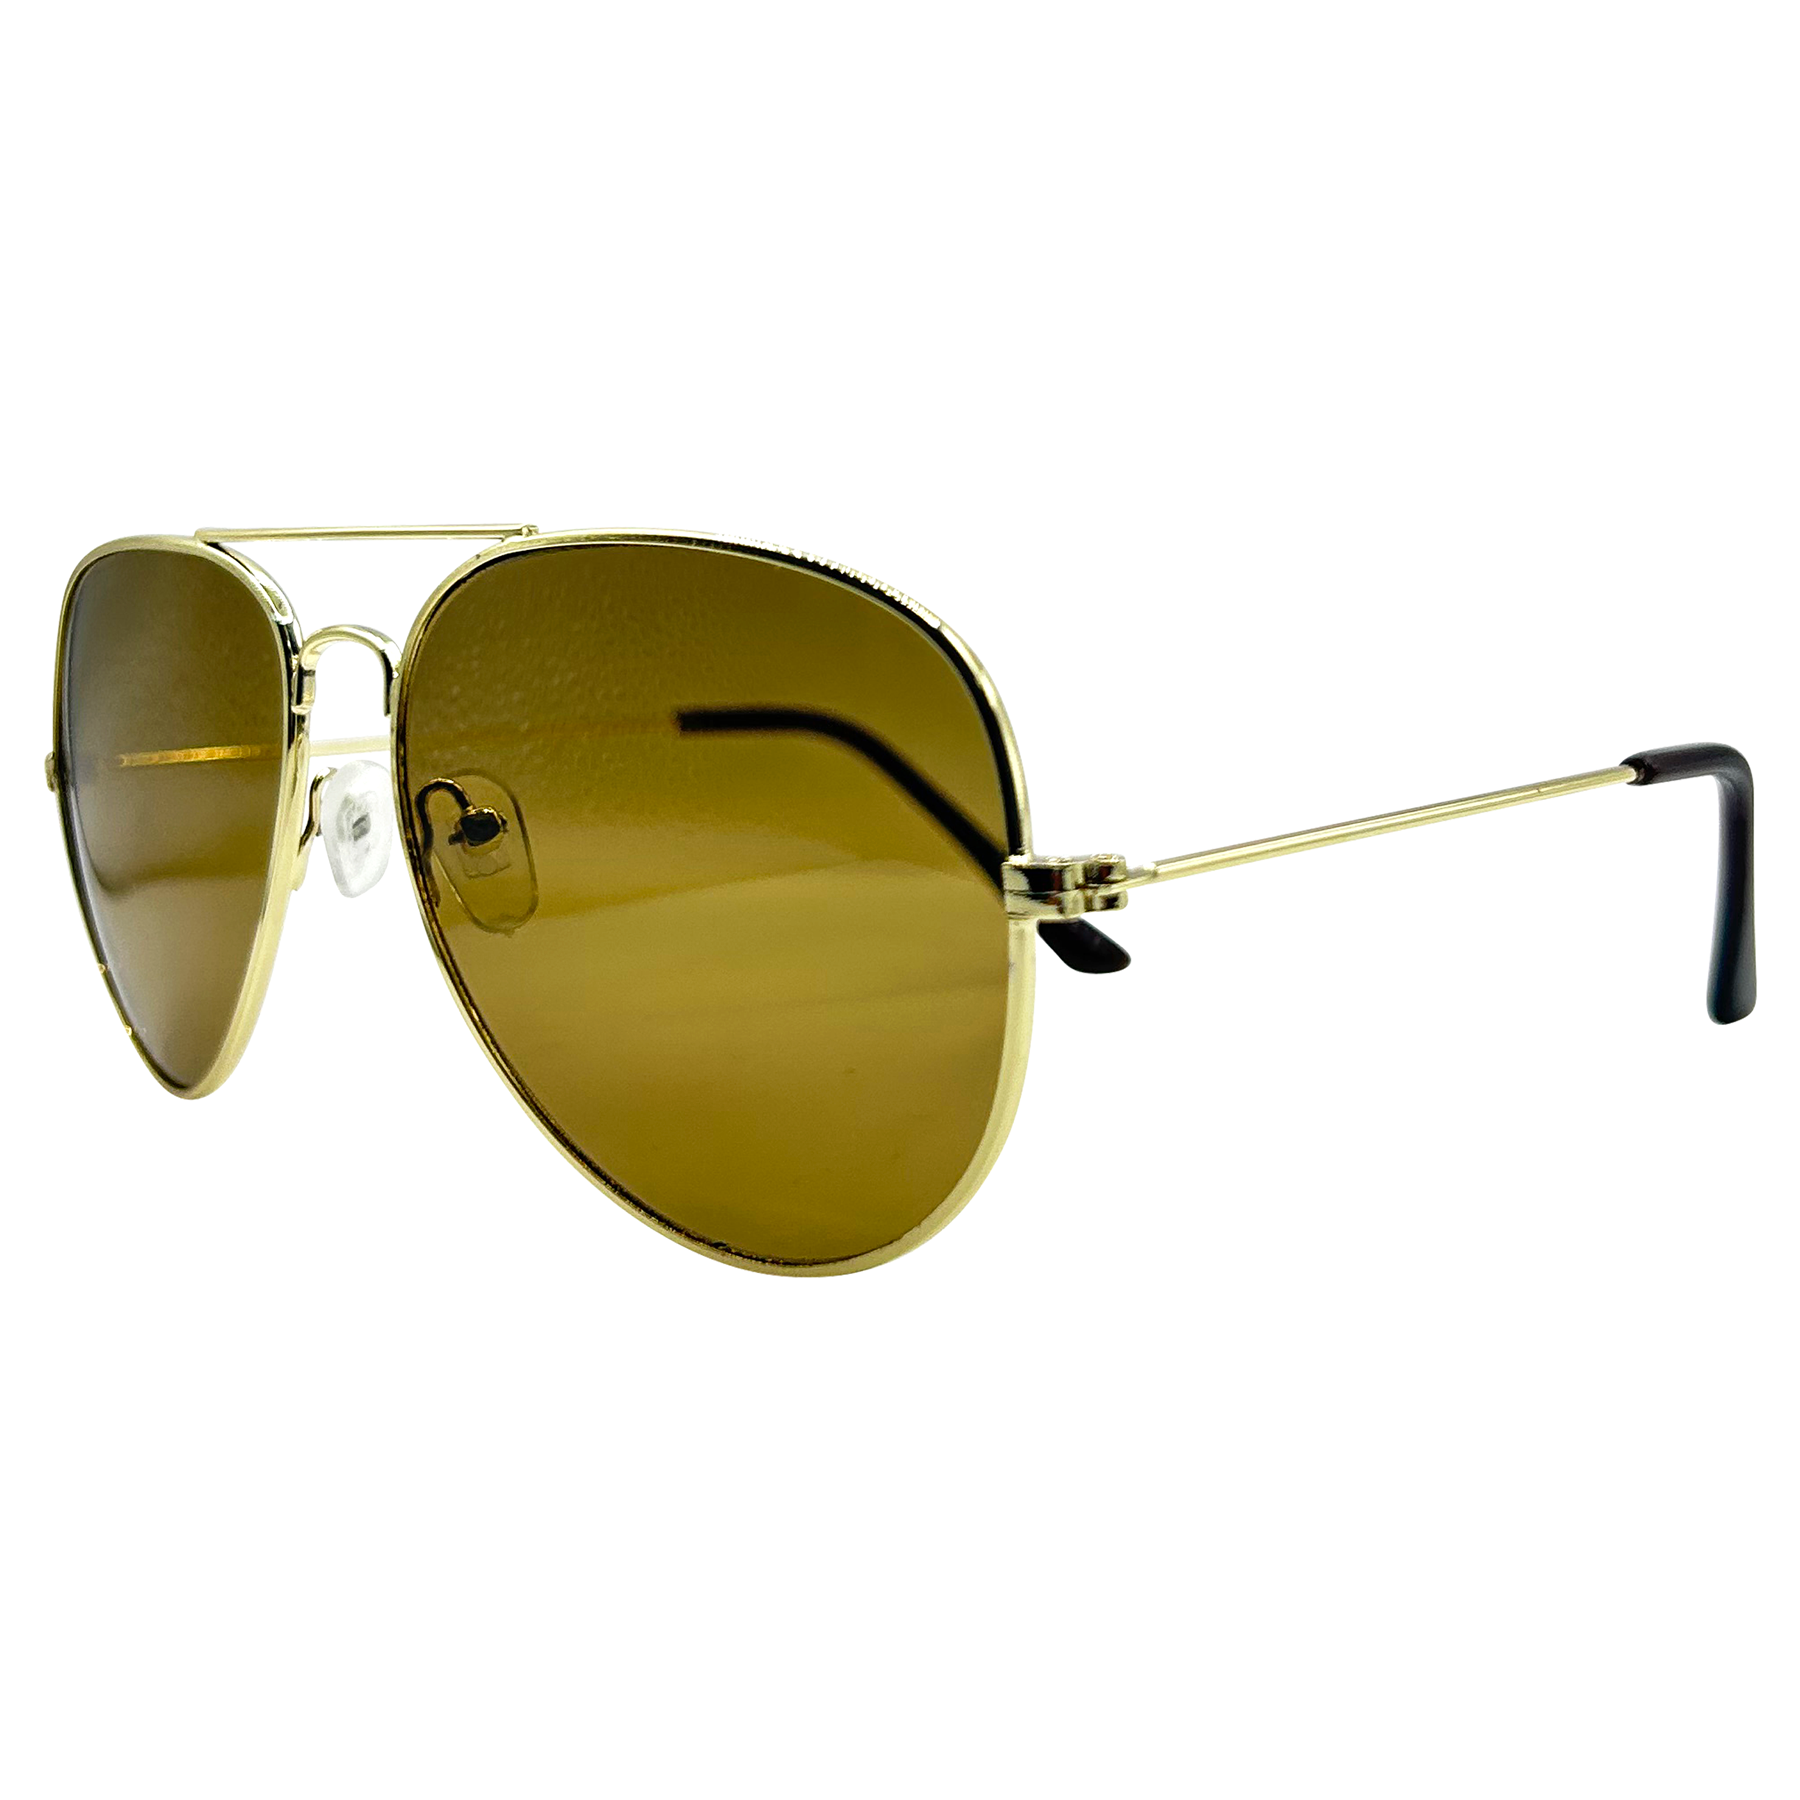 SWARM Classic Retro Teardrop Aviator Sunglasses